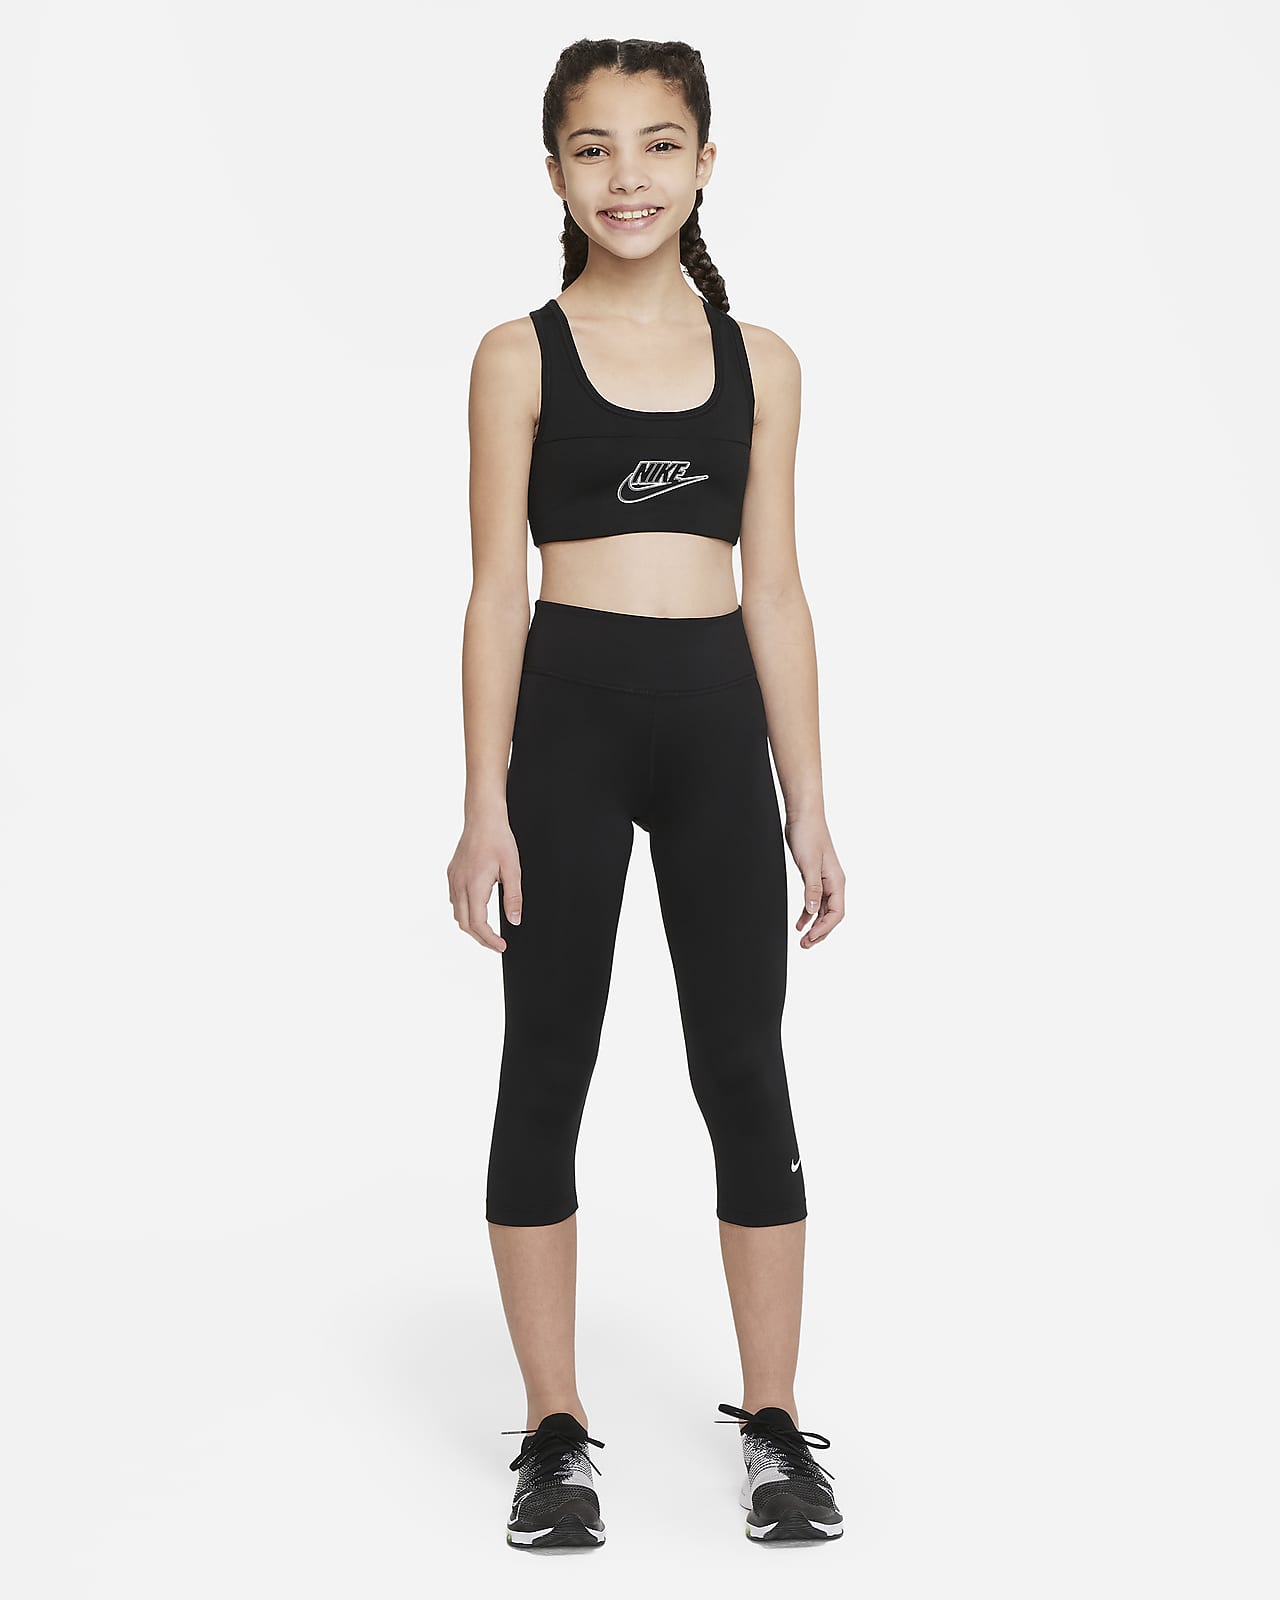 Capri Pants - Buy Women's Workout Capris